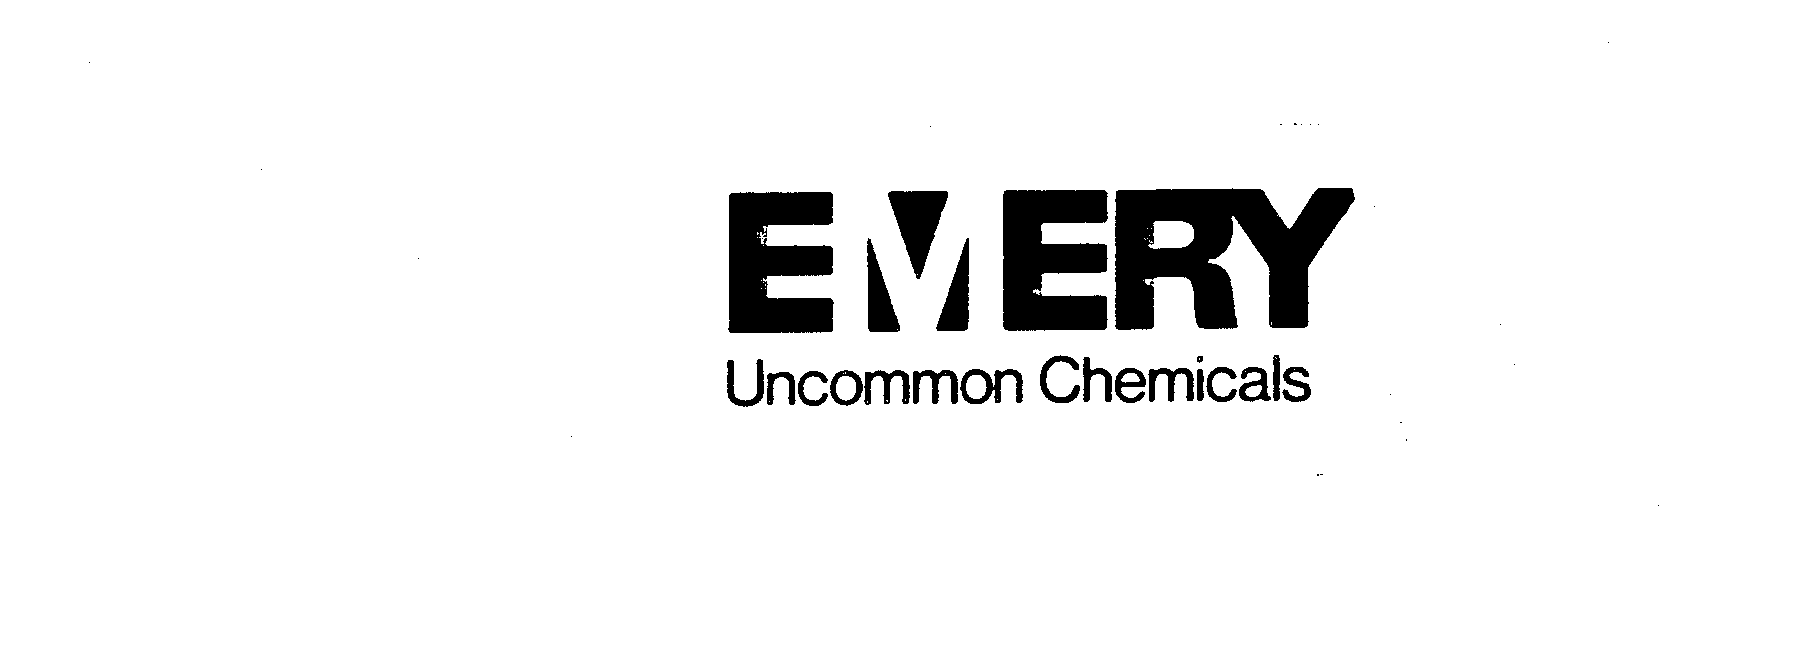  EMERY UNCOMMON CHEMICALS